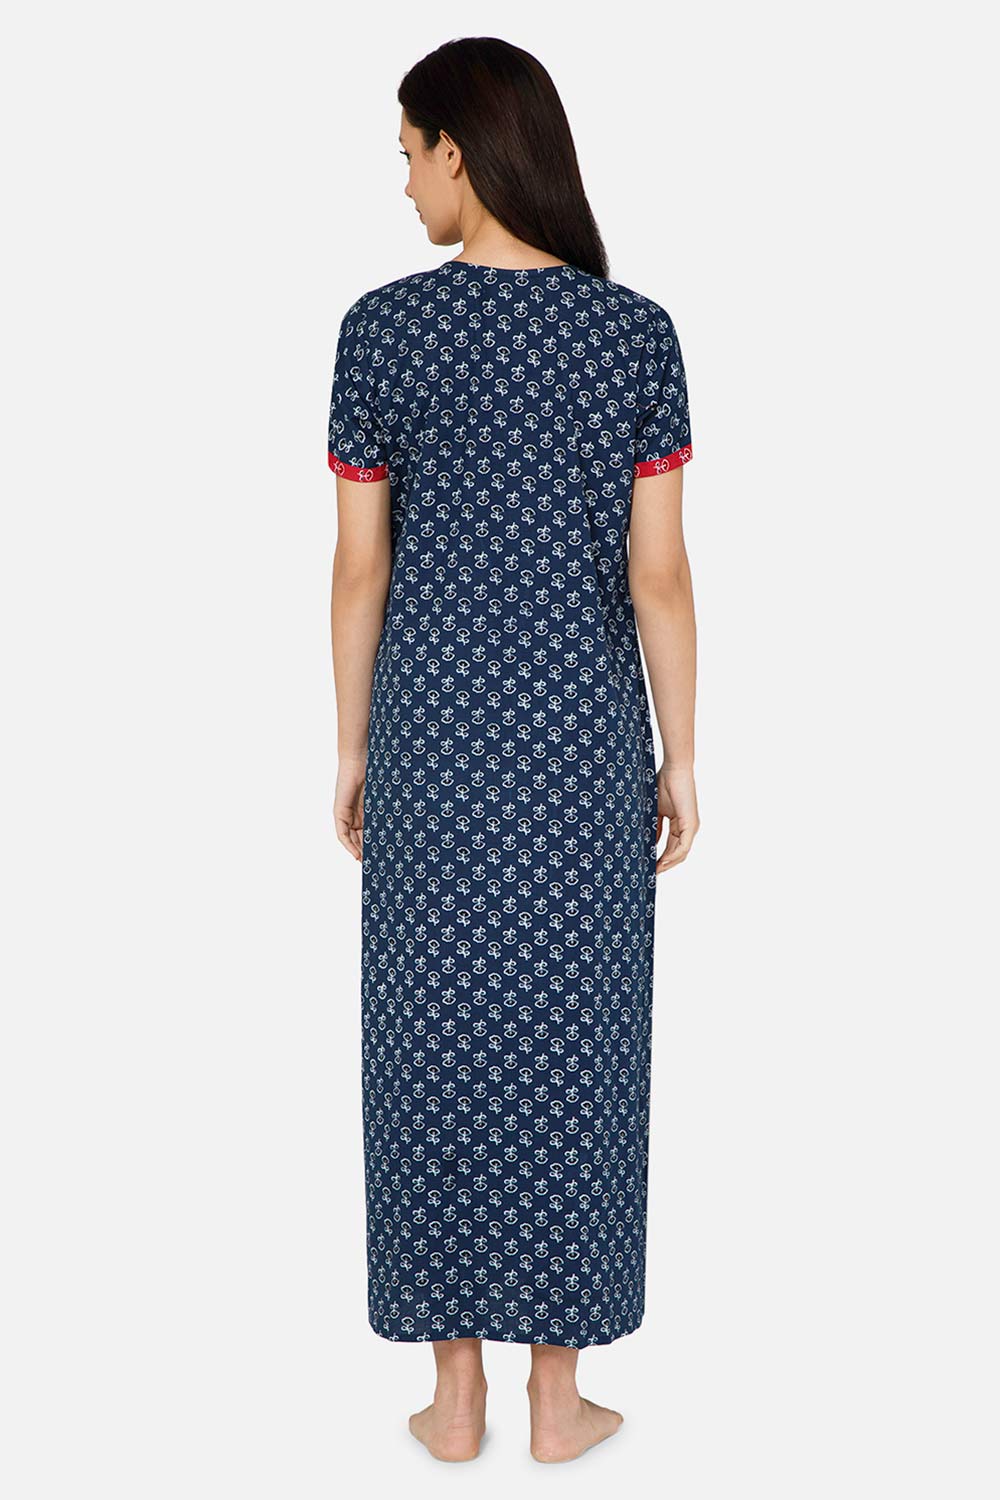 Naidu Hall A-line Front Open Women's Nighty Full Length Half Sleeve  - Navy Blue - R125